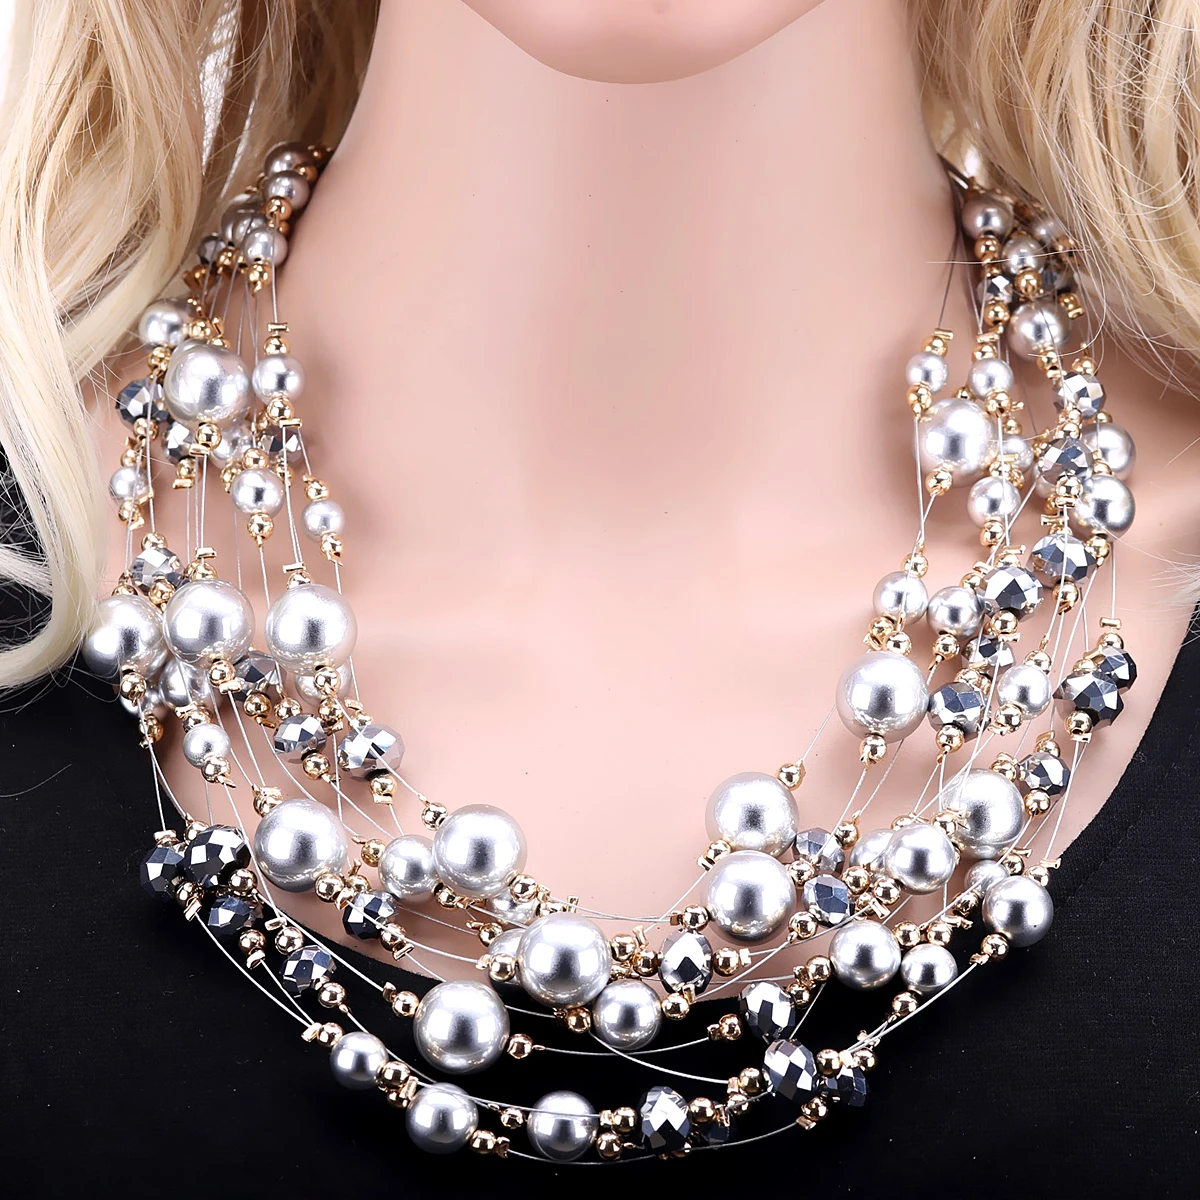 

New Fashion Statement Handmade Choker Bib Necklace for Women Girls Bohemia Strands Crystals Jewelry Dropshipping Gifts